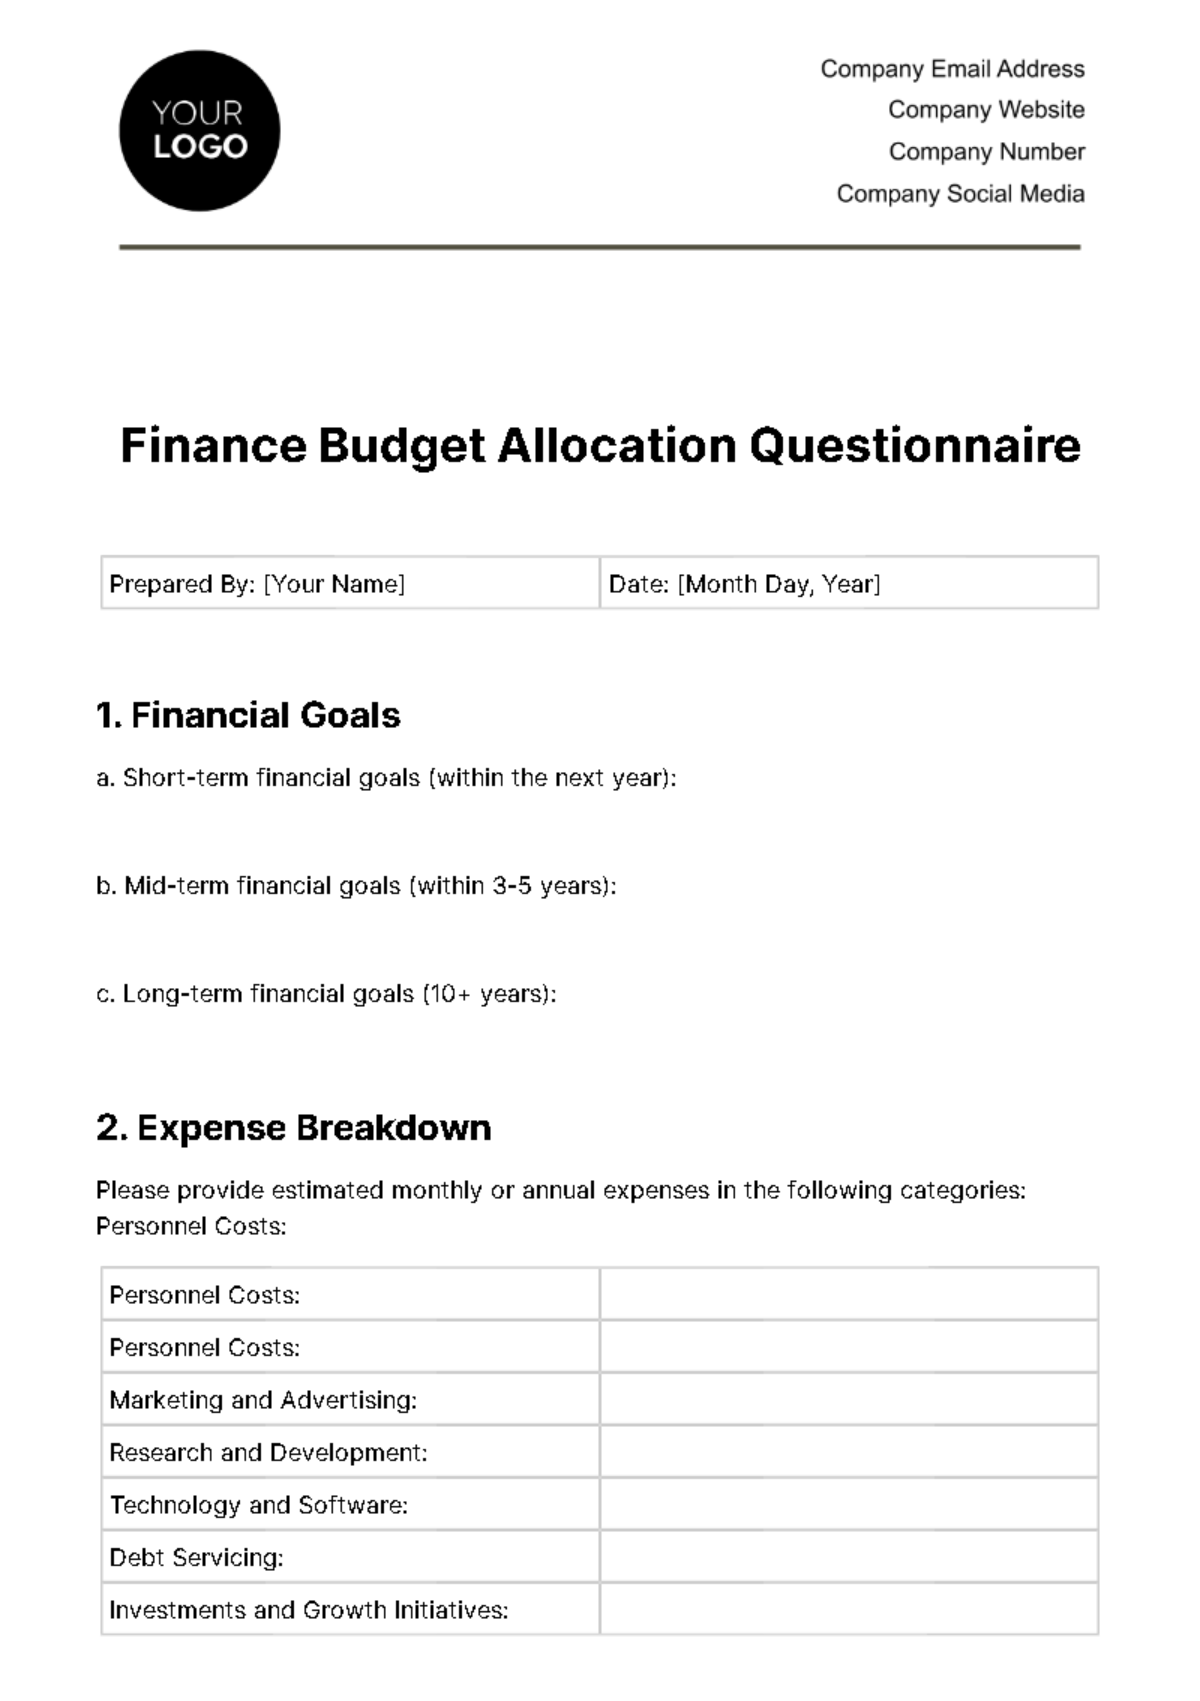 Finance Budget Allocation Questionnaire Template